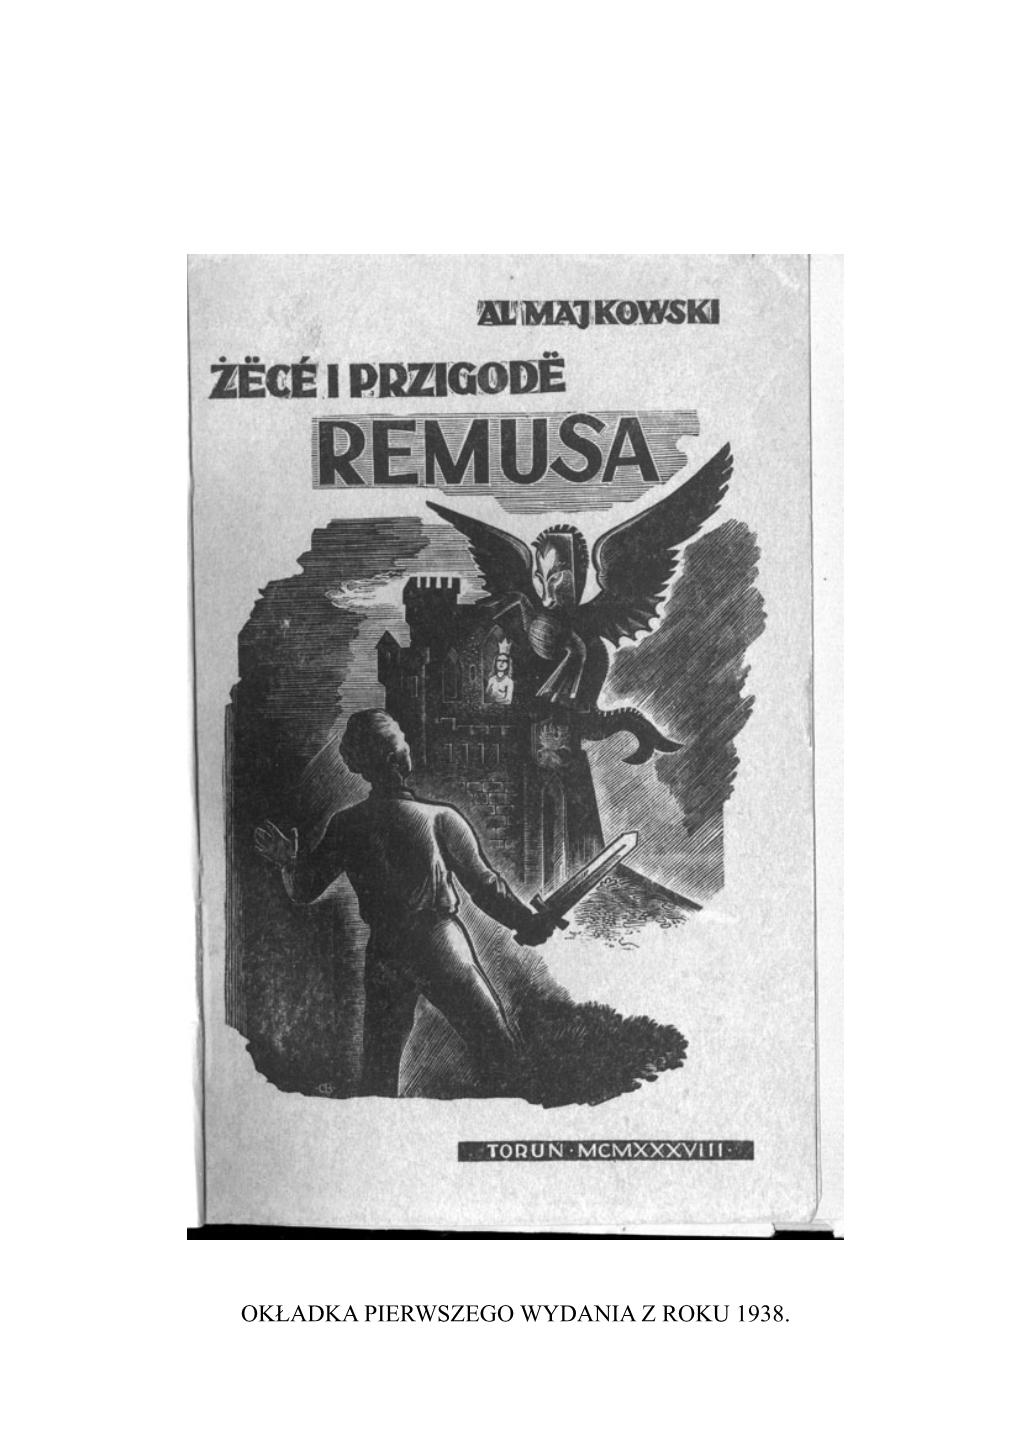 Aleksander Majkowski: Remus